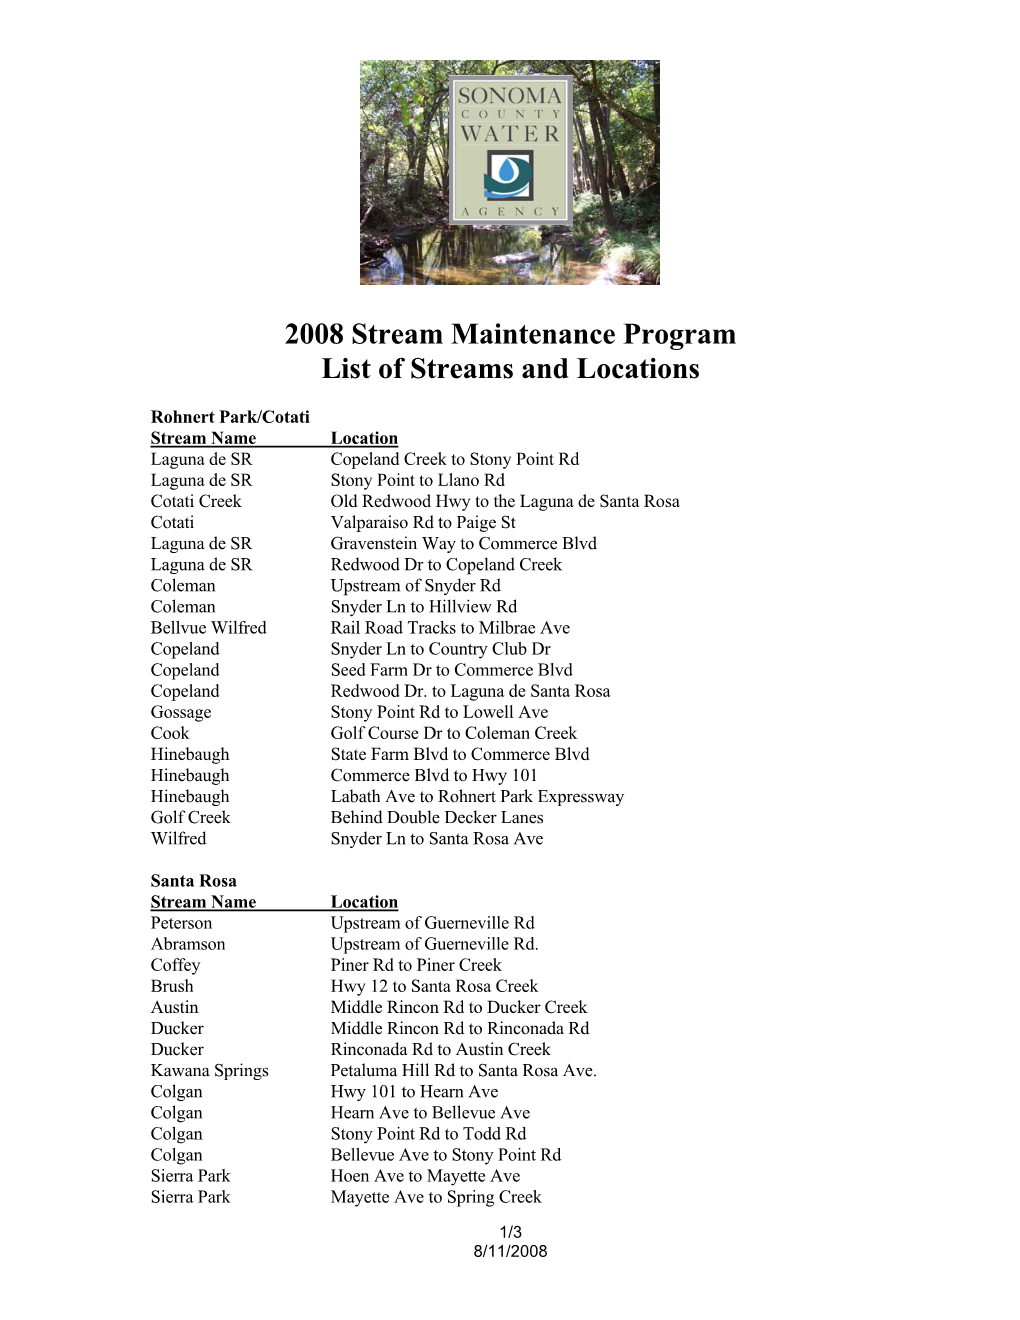 2008 Stream Maintenance Program List of Streams and Locations